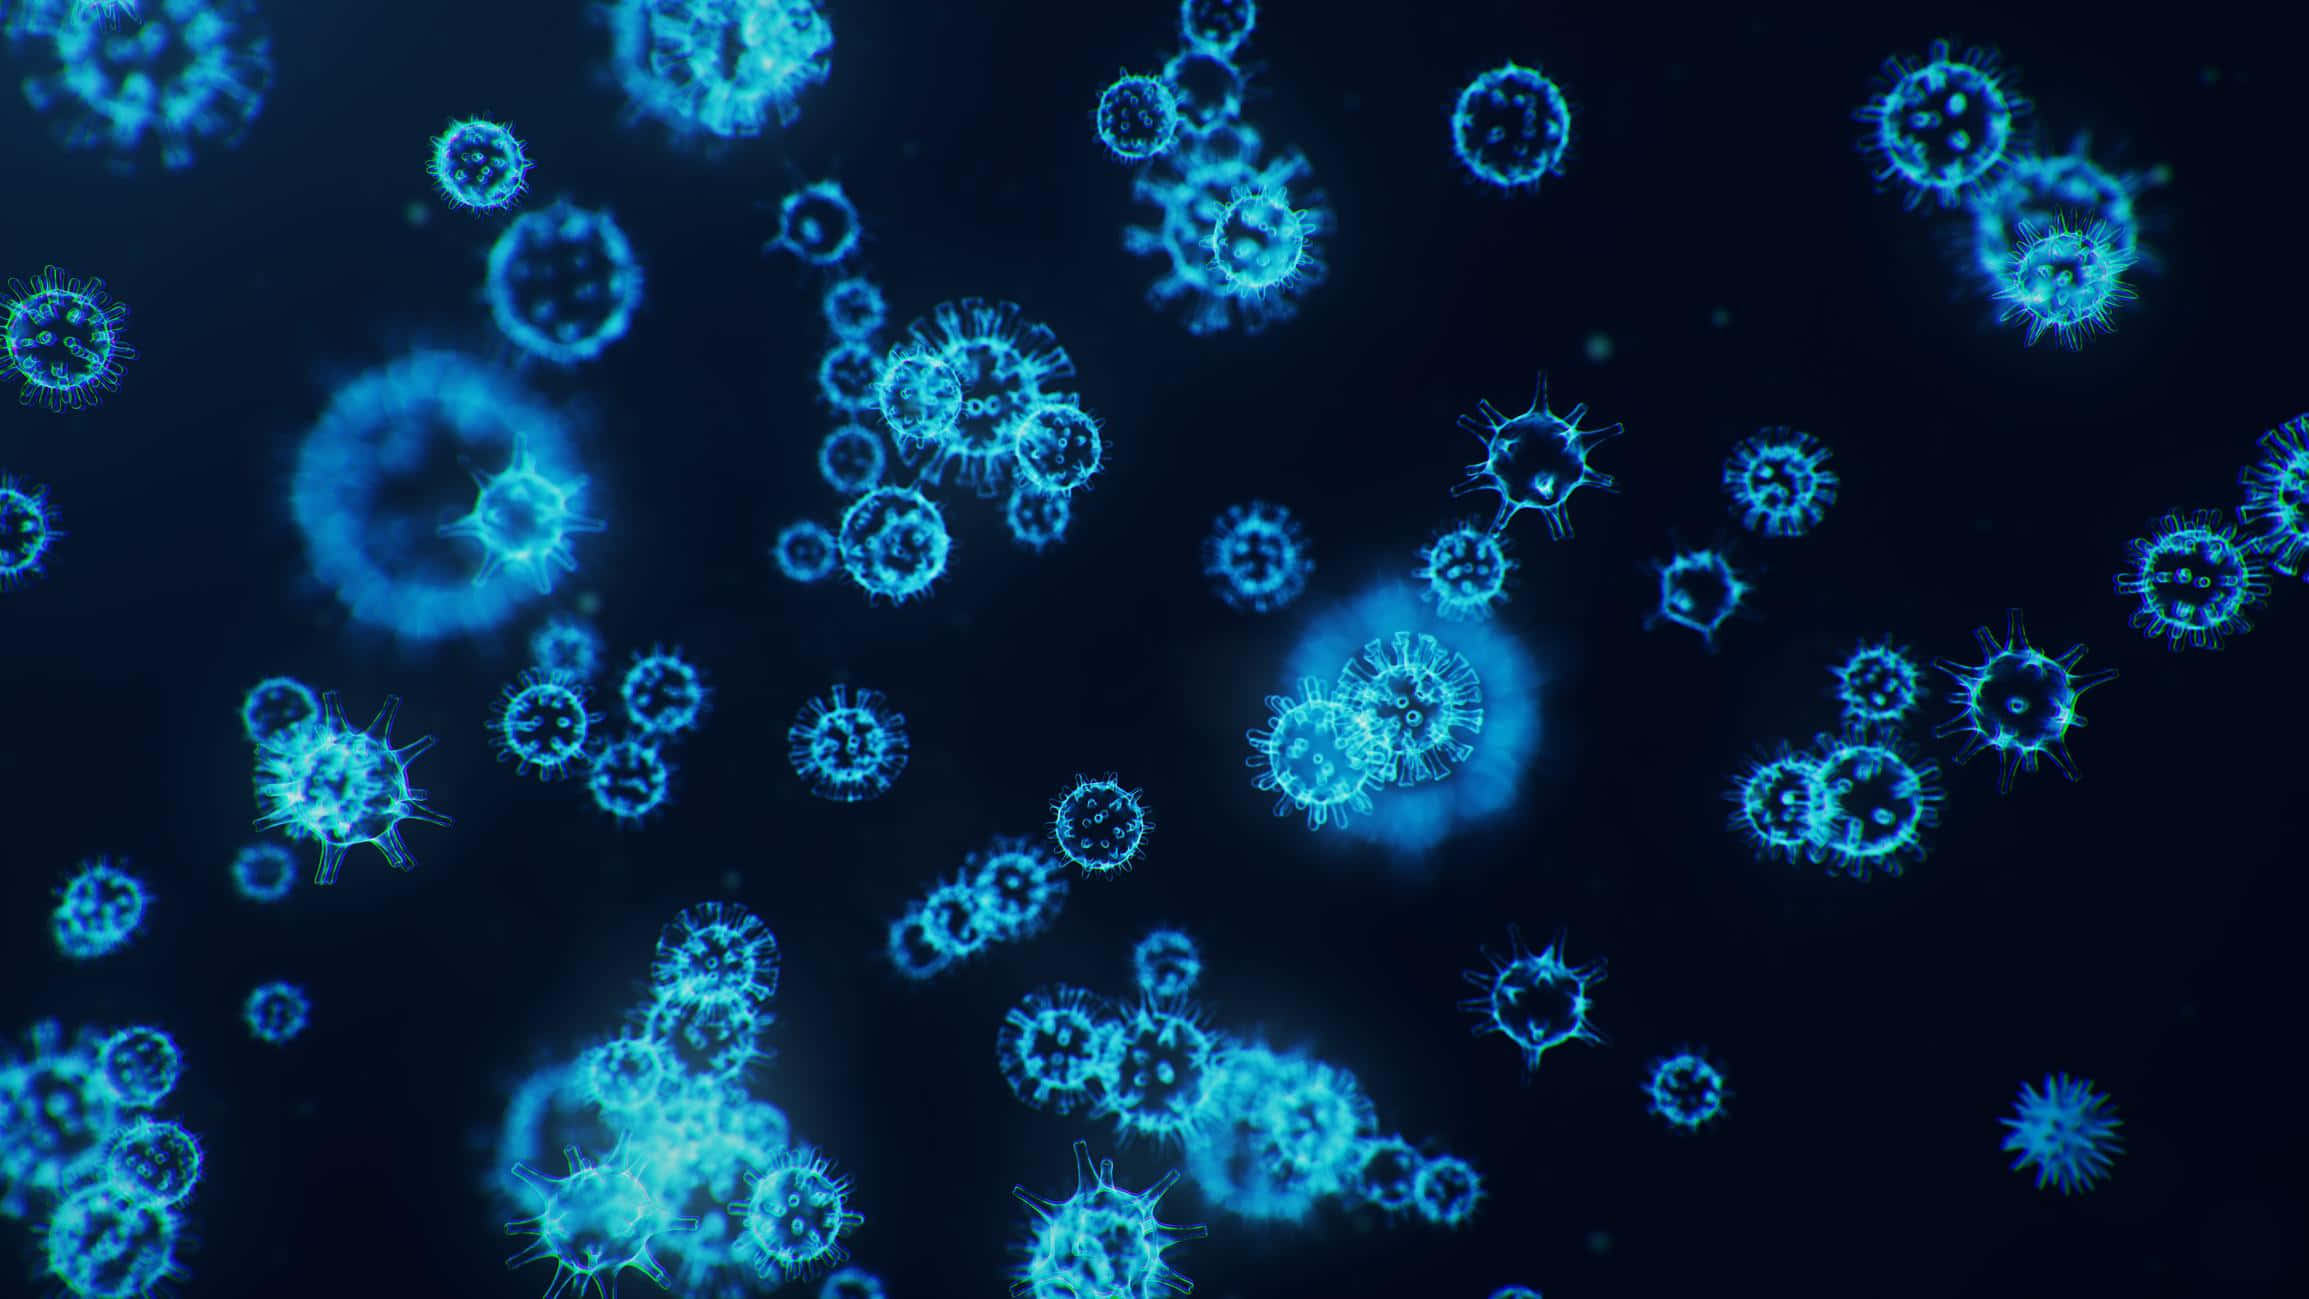 Close-up of the coronavirus pathogen under a microscope